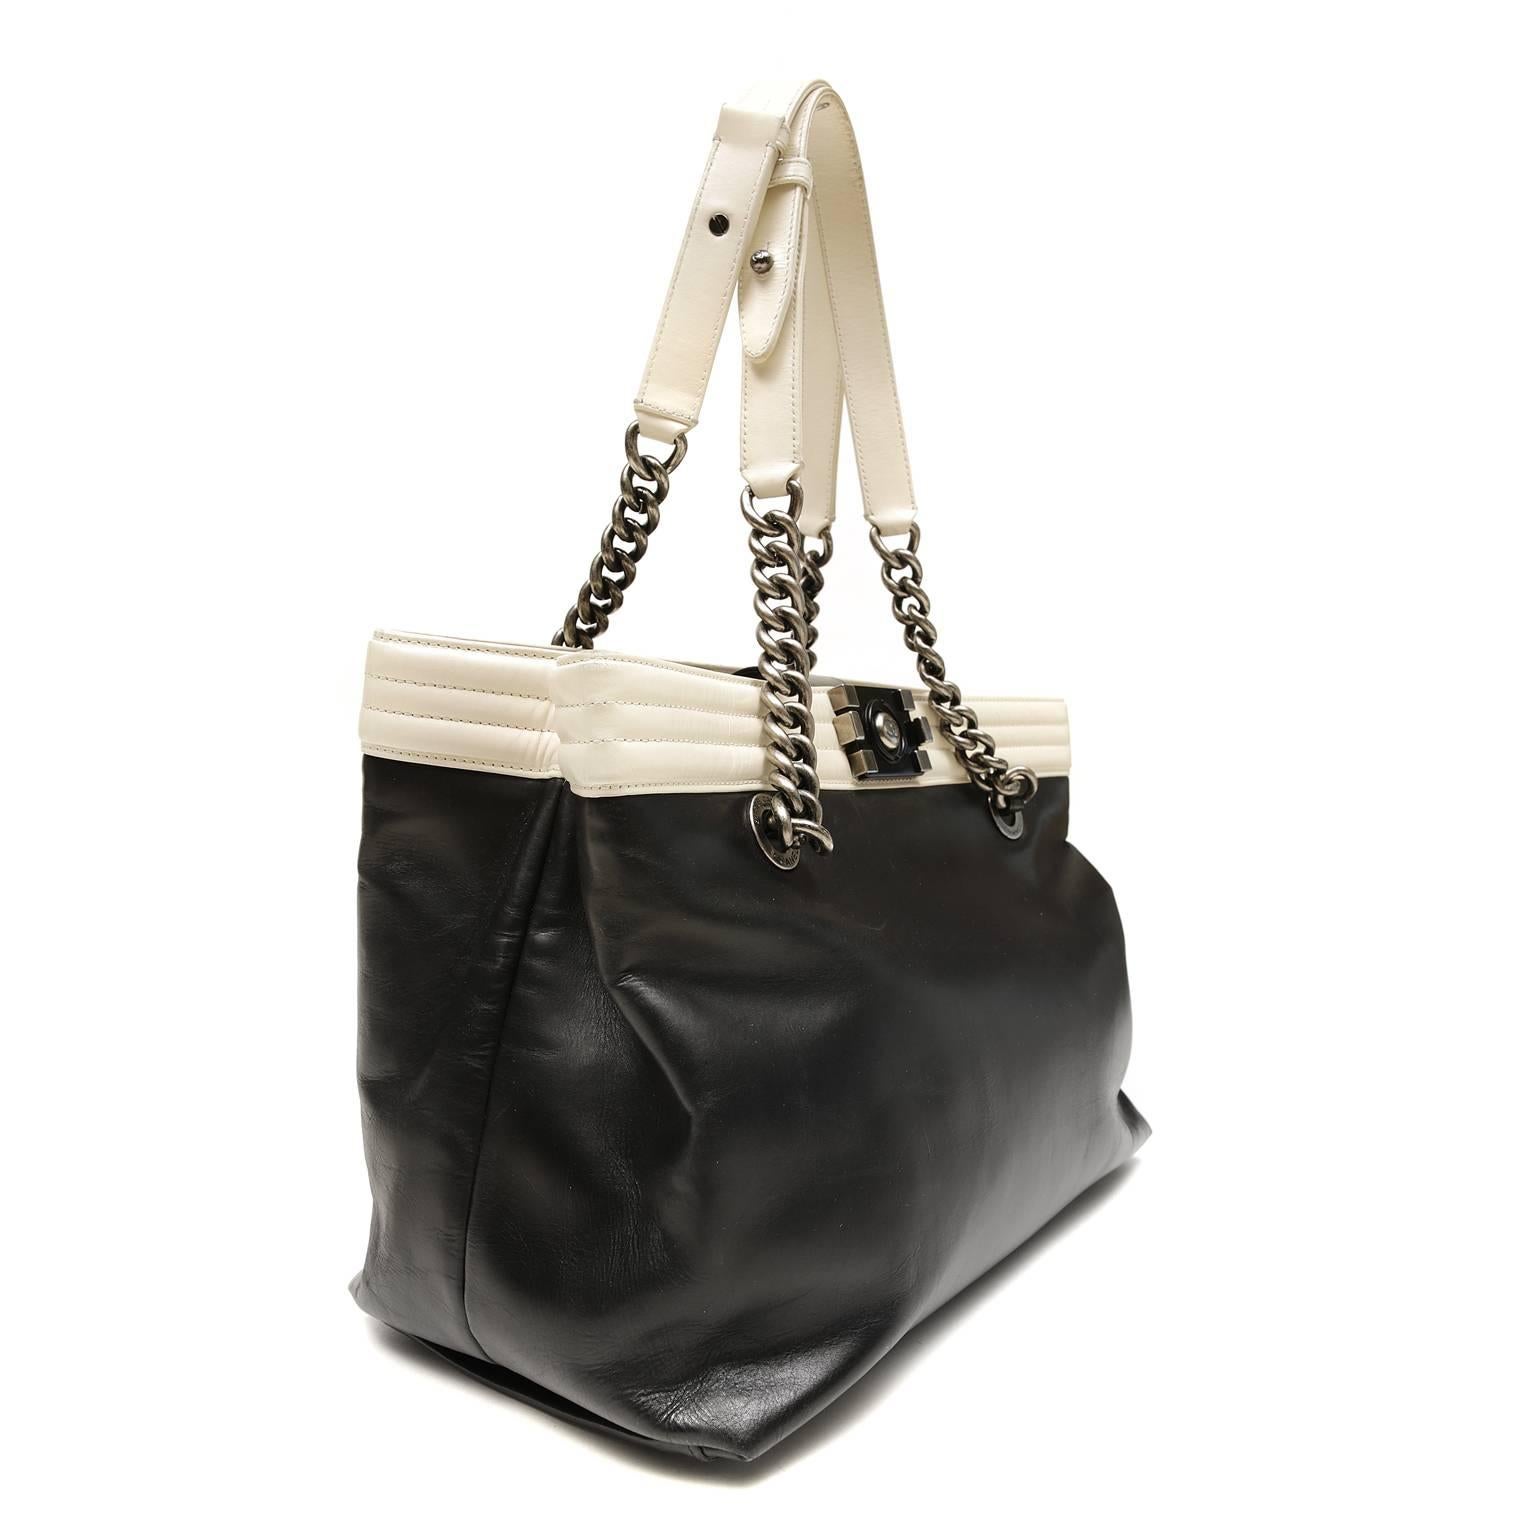 Chanel Black and Cream Leather Boy Bag Tote In New Condition For Sale In Malibu, CA